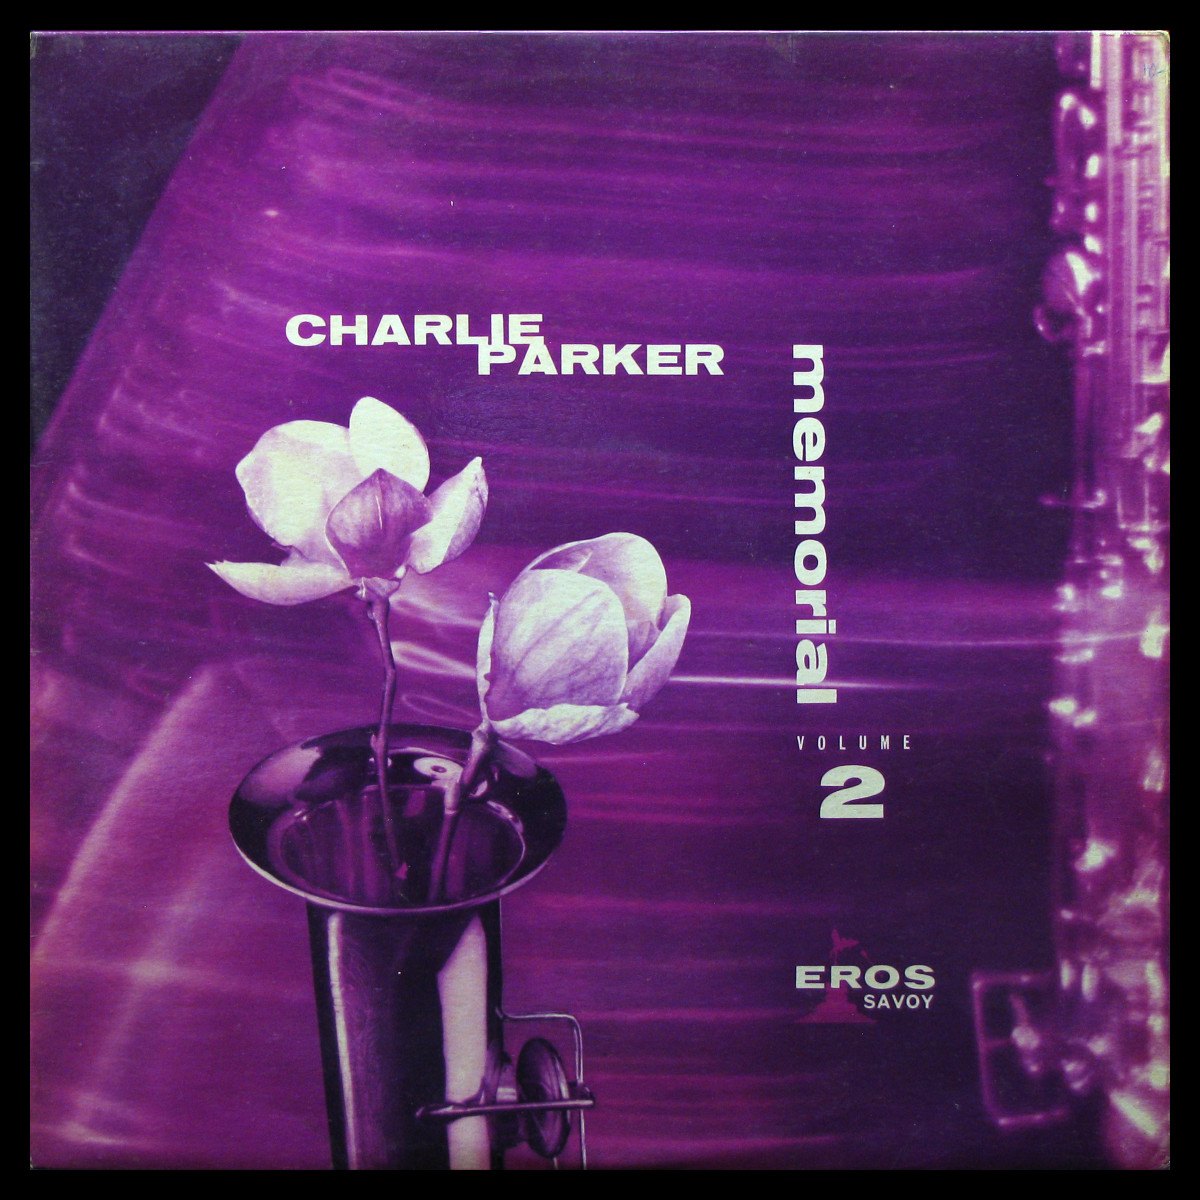 Charlie Parker Memorial Volume 2